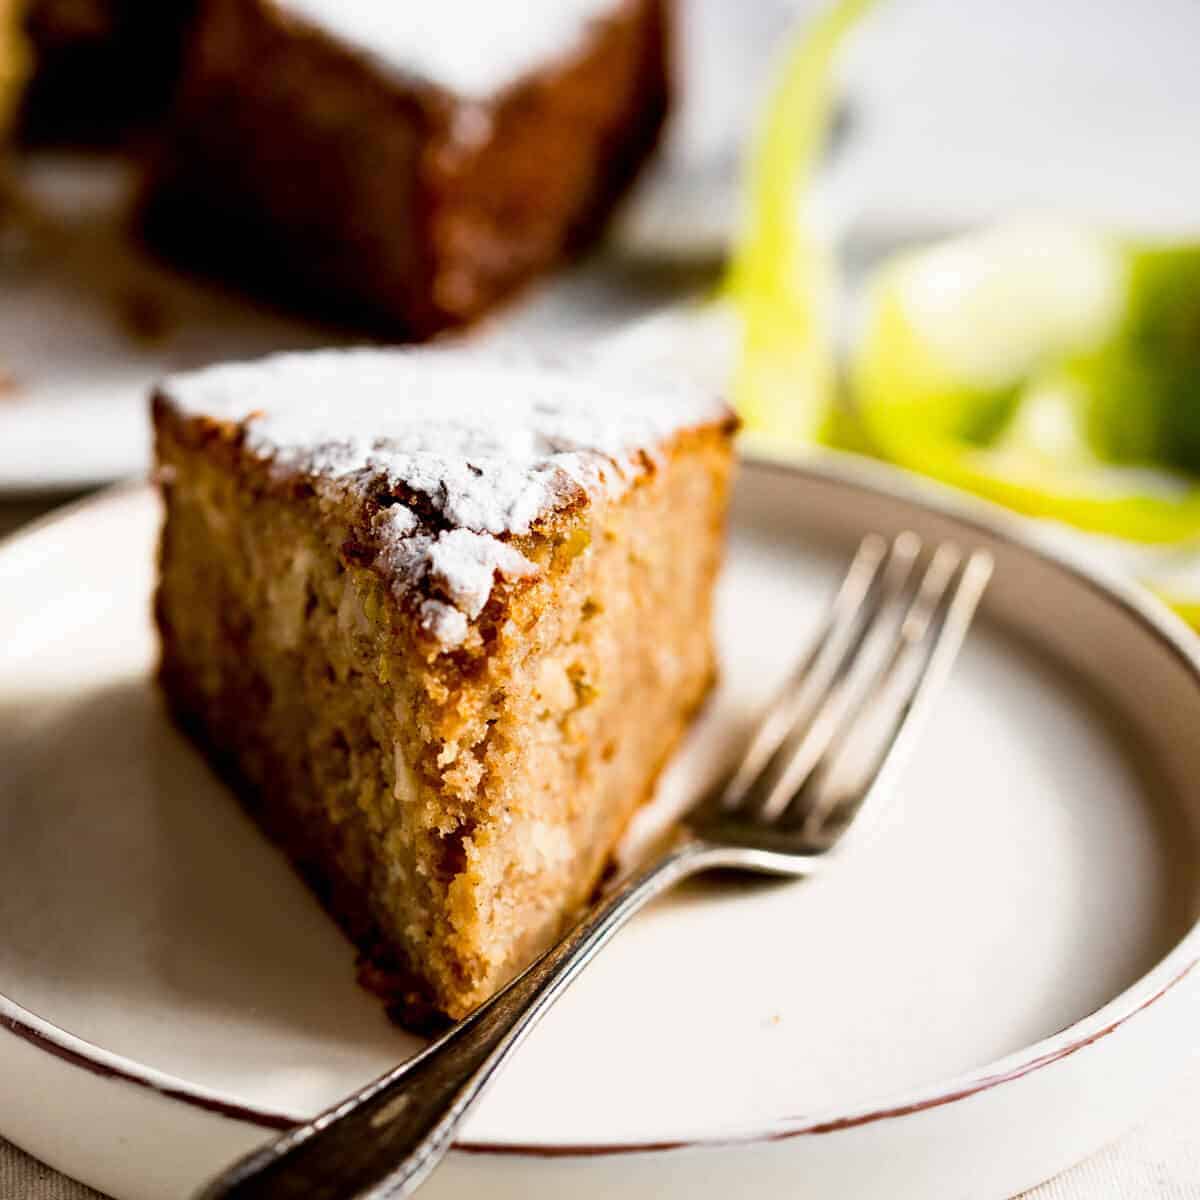 Happy Flour: Apple Chiffon Cake